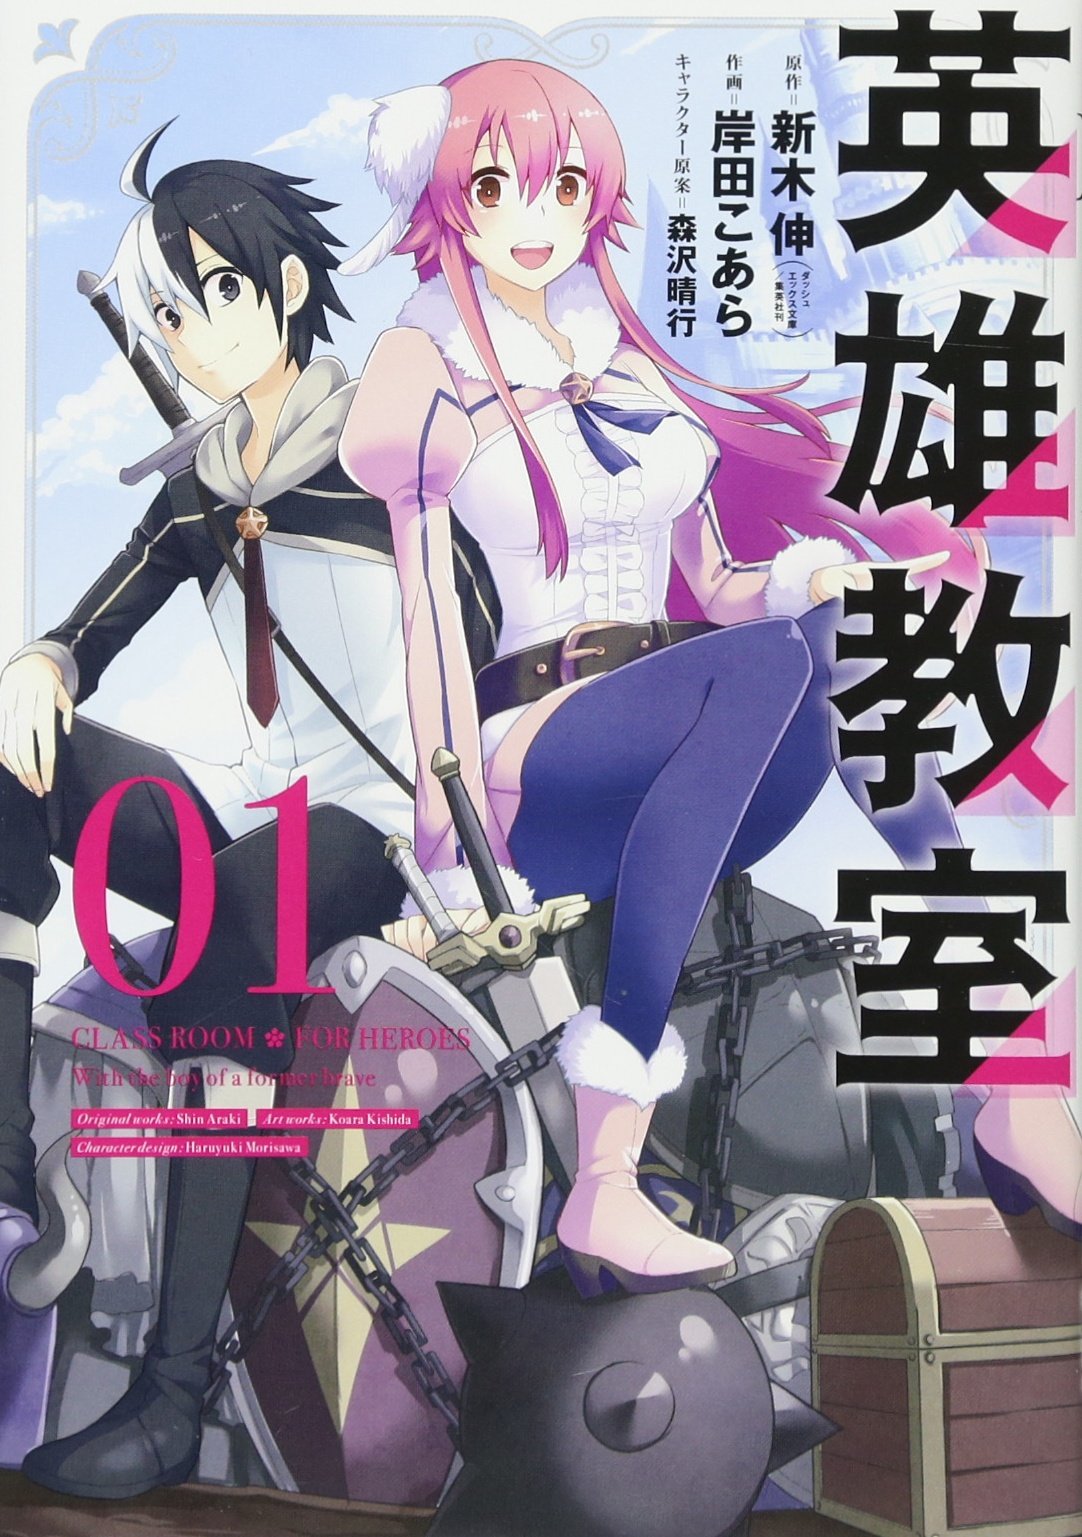 Manga Mogura RE on X: Classroom✿For Heroes (Eiyuu Kyoushitsu) LN manga  adaption by Araki Shin, Kishida Koara, Morisawa Haruyuki is on cover of the  upcoming Monthly Shounen Gangan issue 8/2023 Anime Adaption